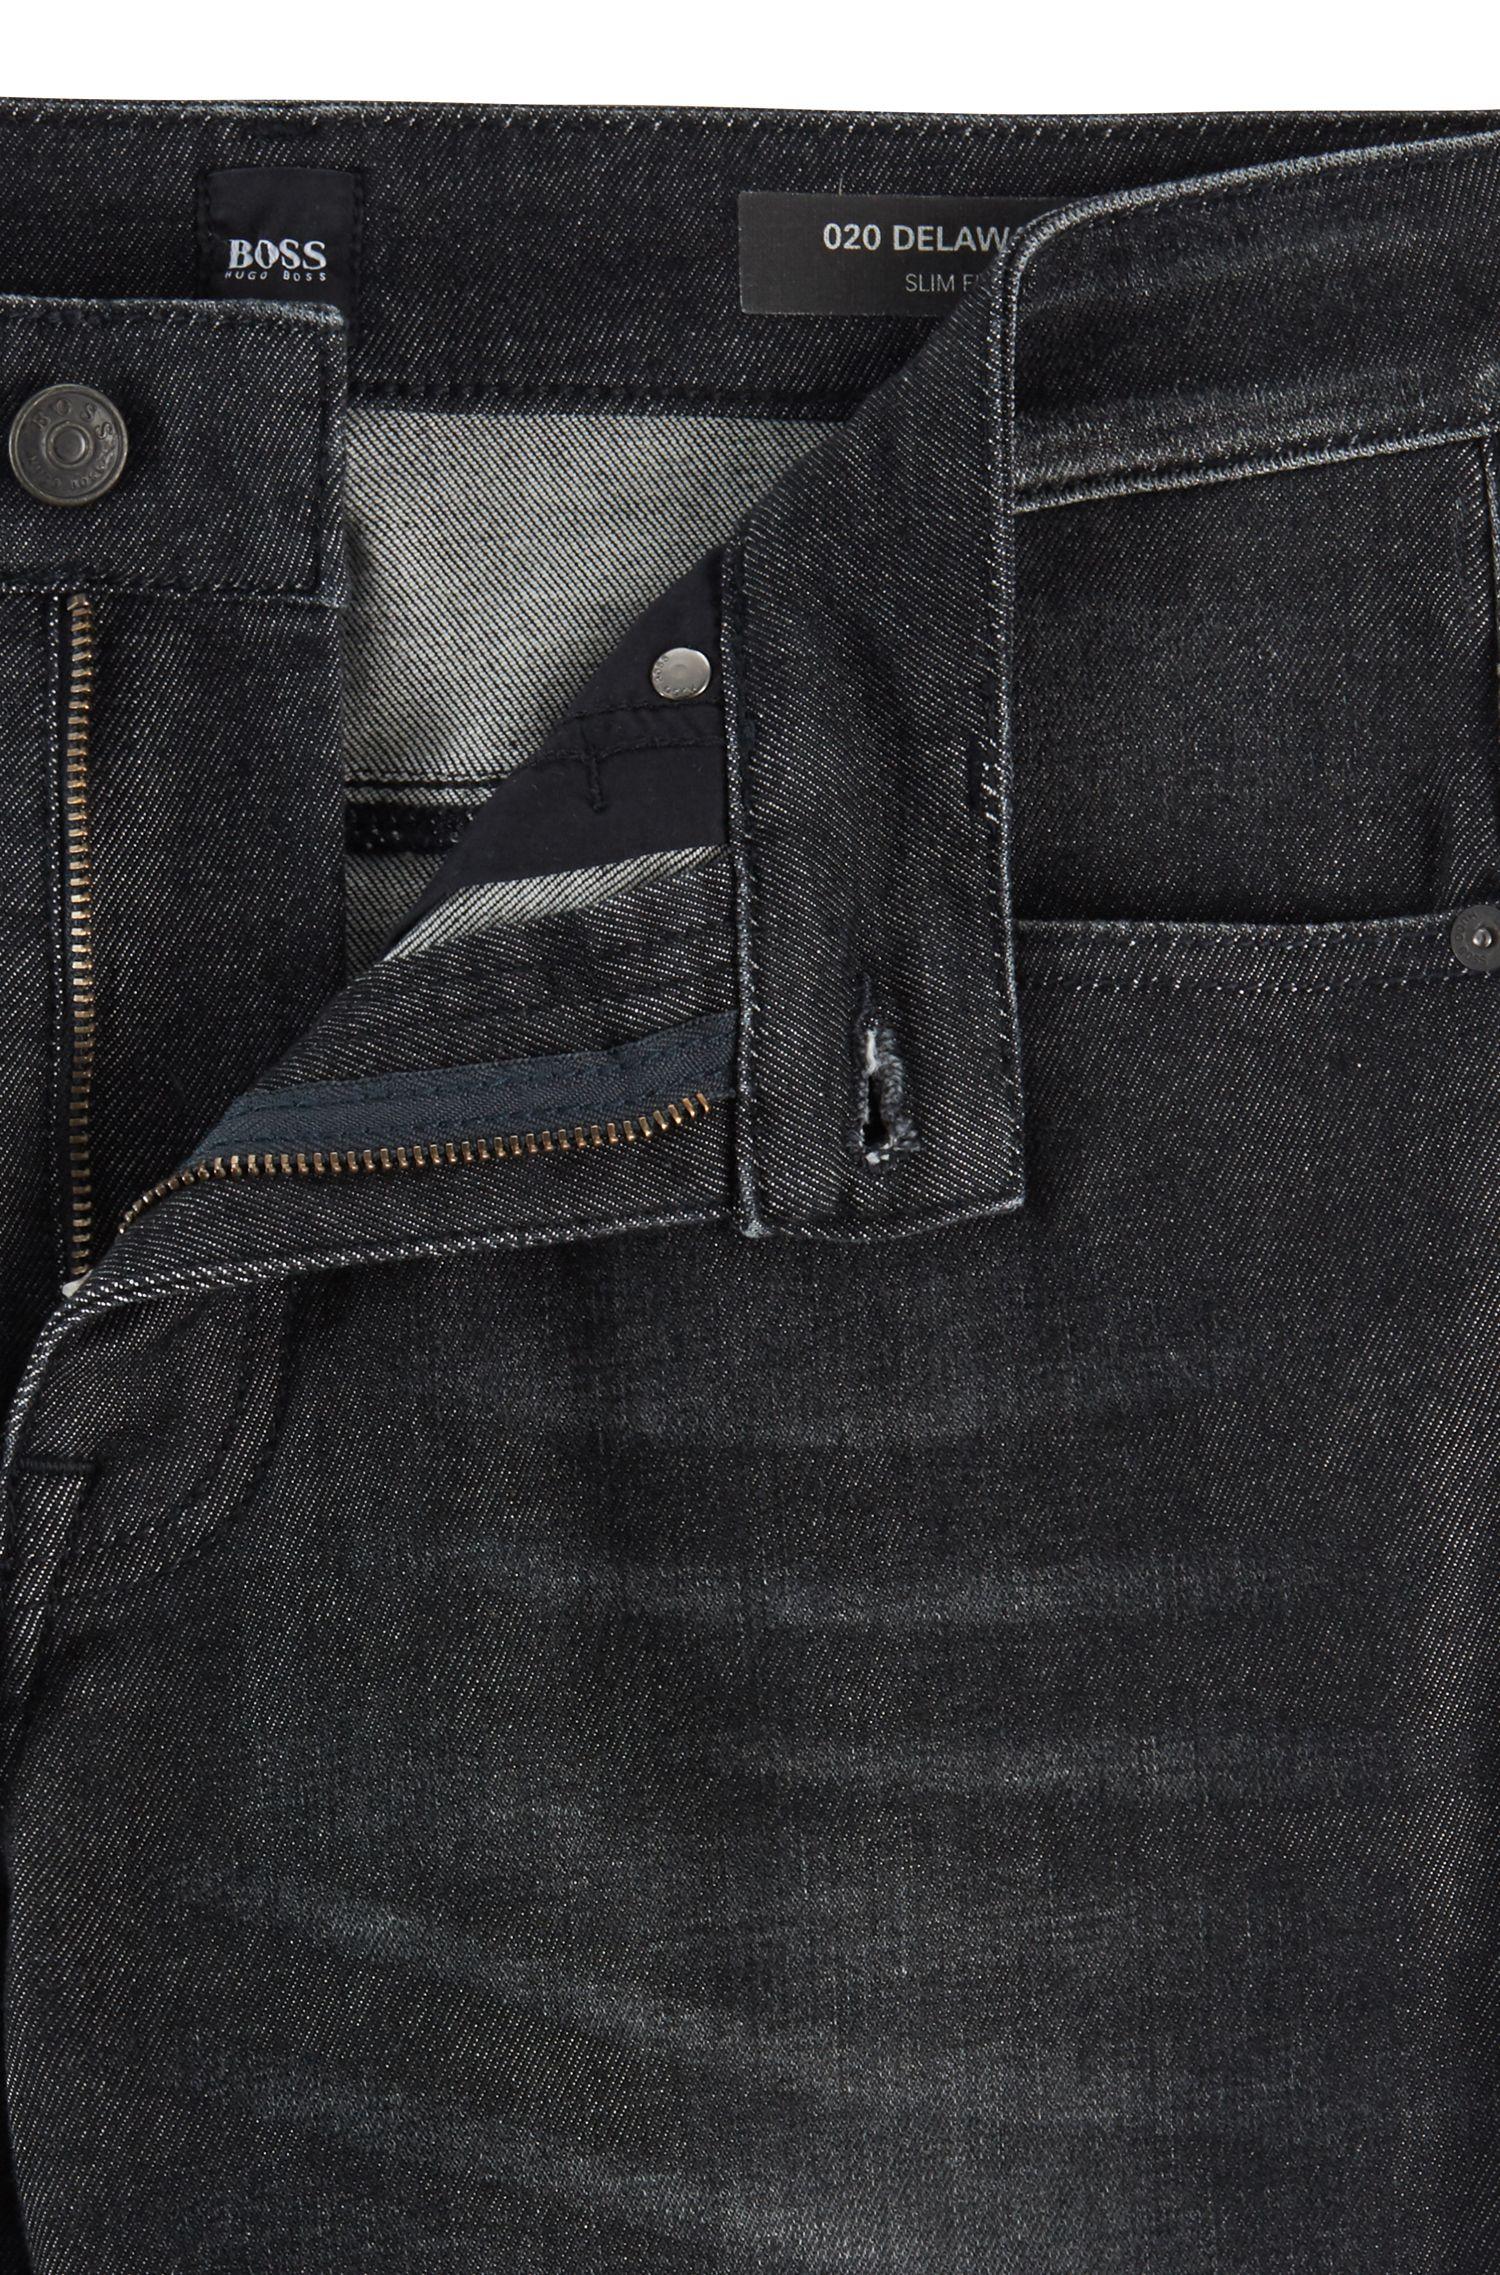 BOSS Slim-fit Jeans In Super-stretch Black Denim for Men - Lyst